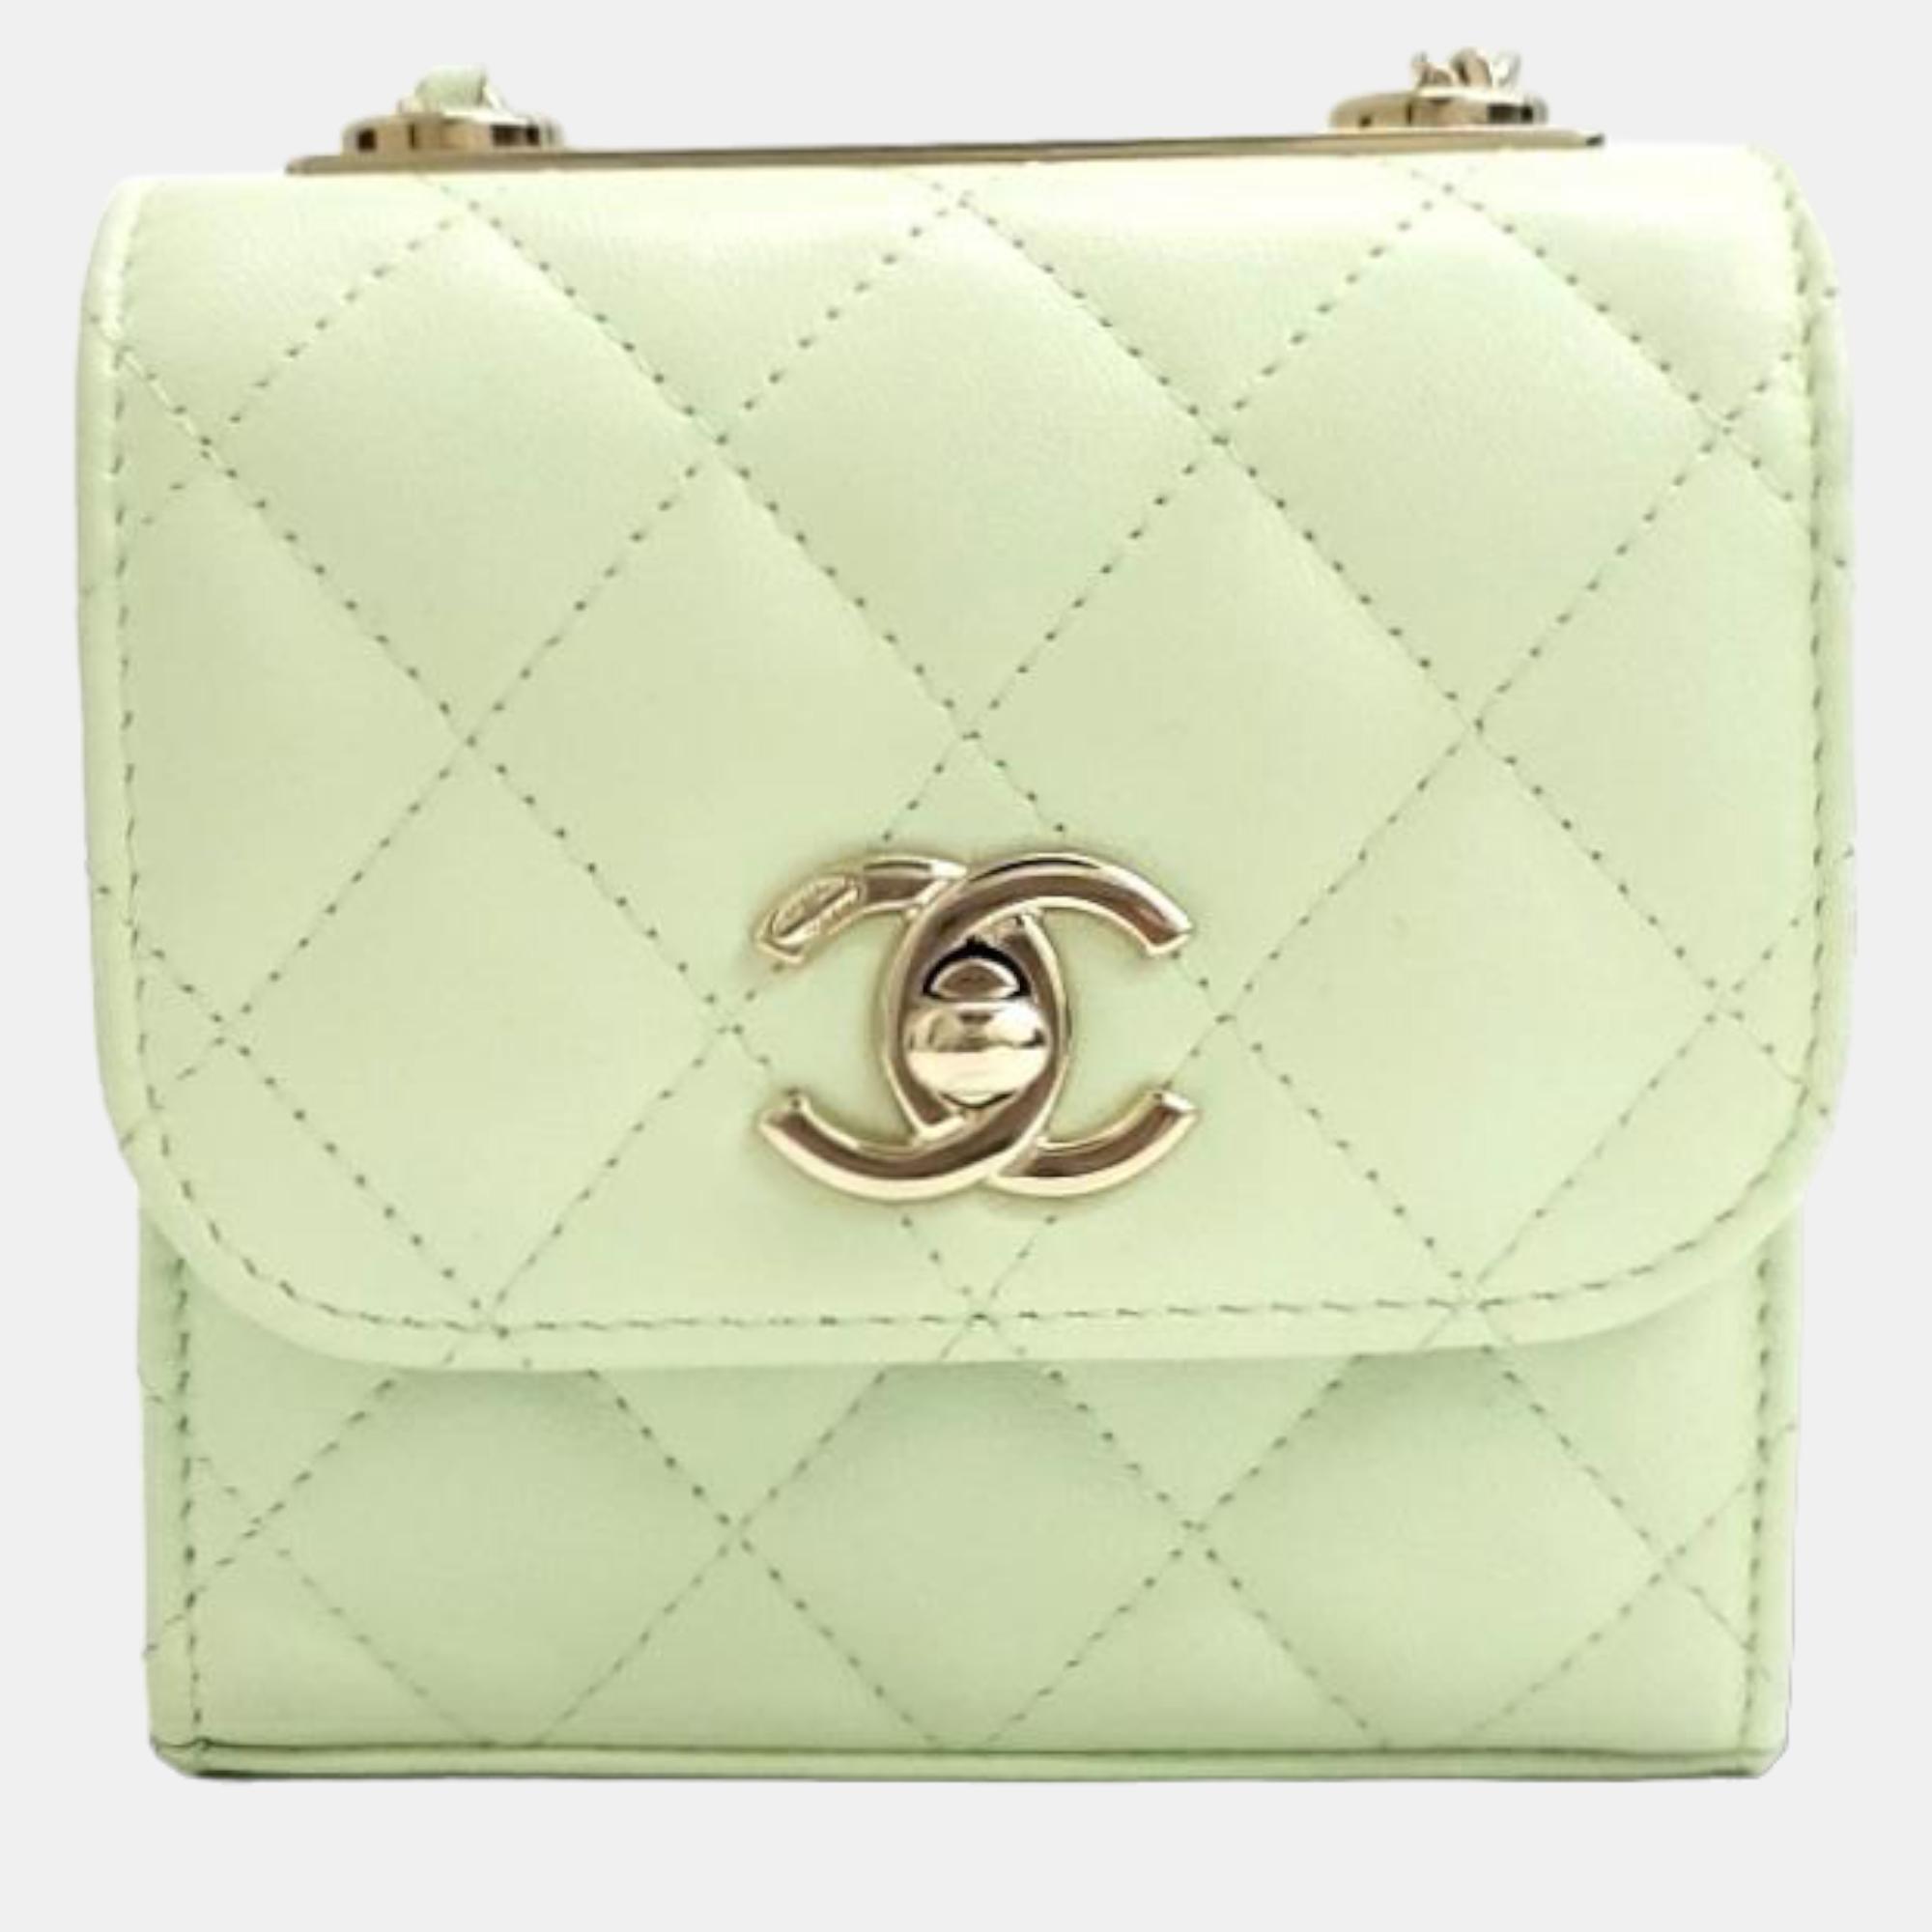 Chanel green lambskin leather mini trendy cc clutch bag